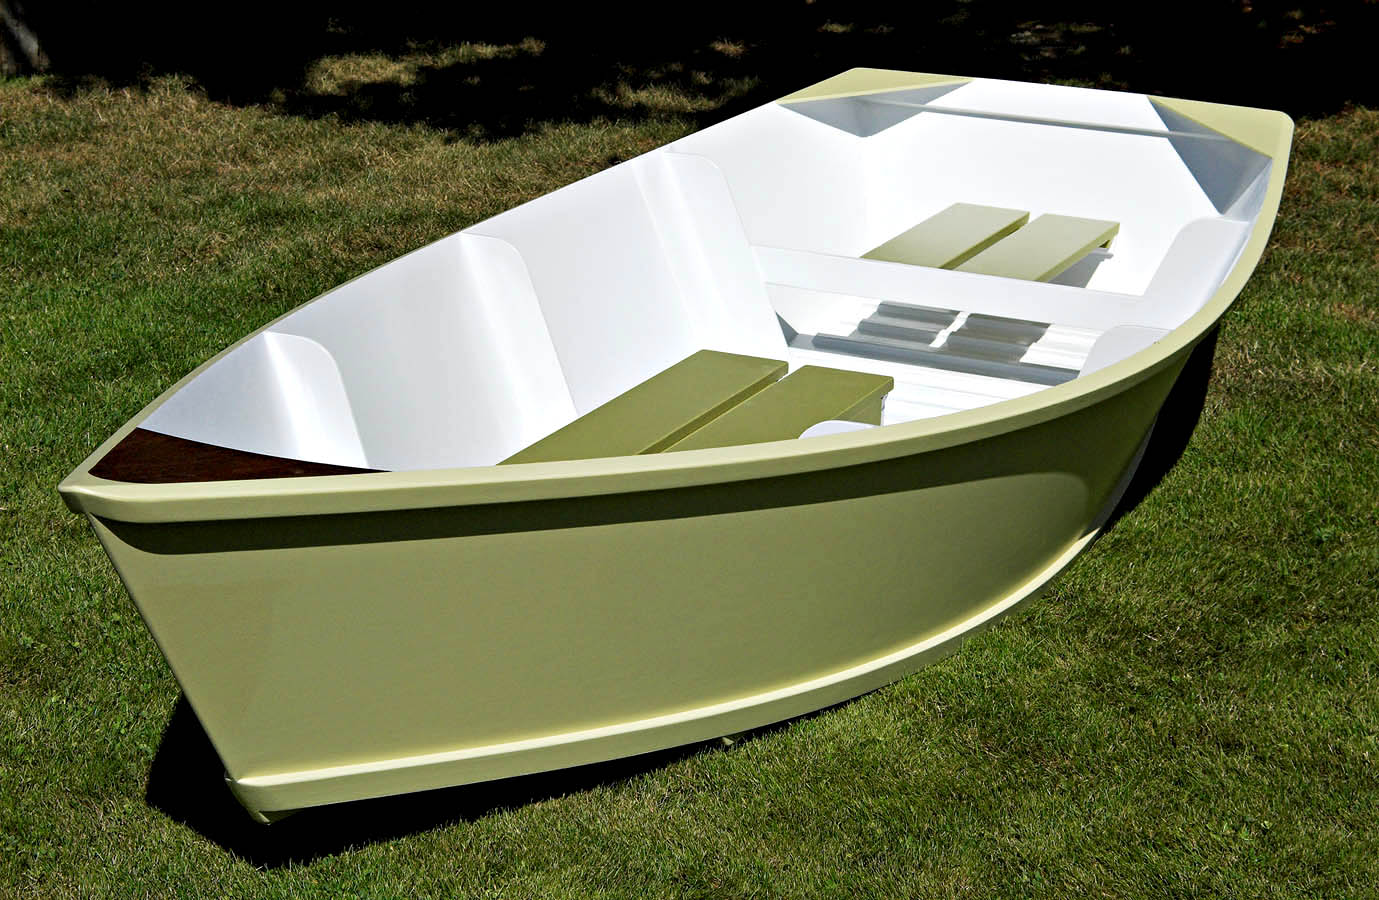 ... boats flat bottom boat hull design 16 foot wooden flat bottom jon boat